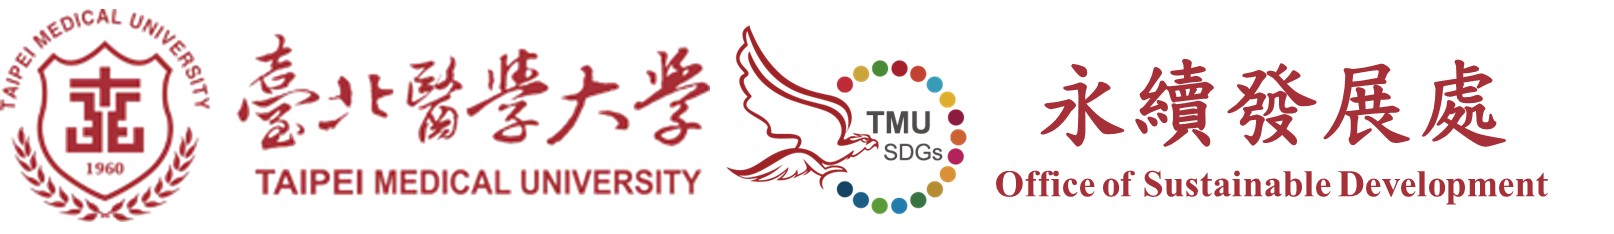 TMU SDGs